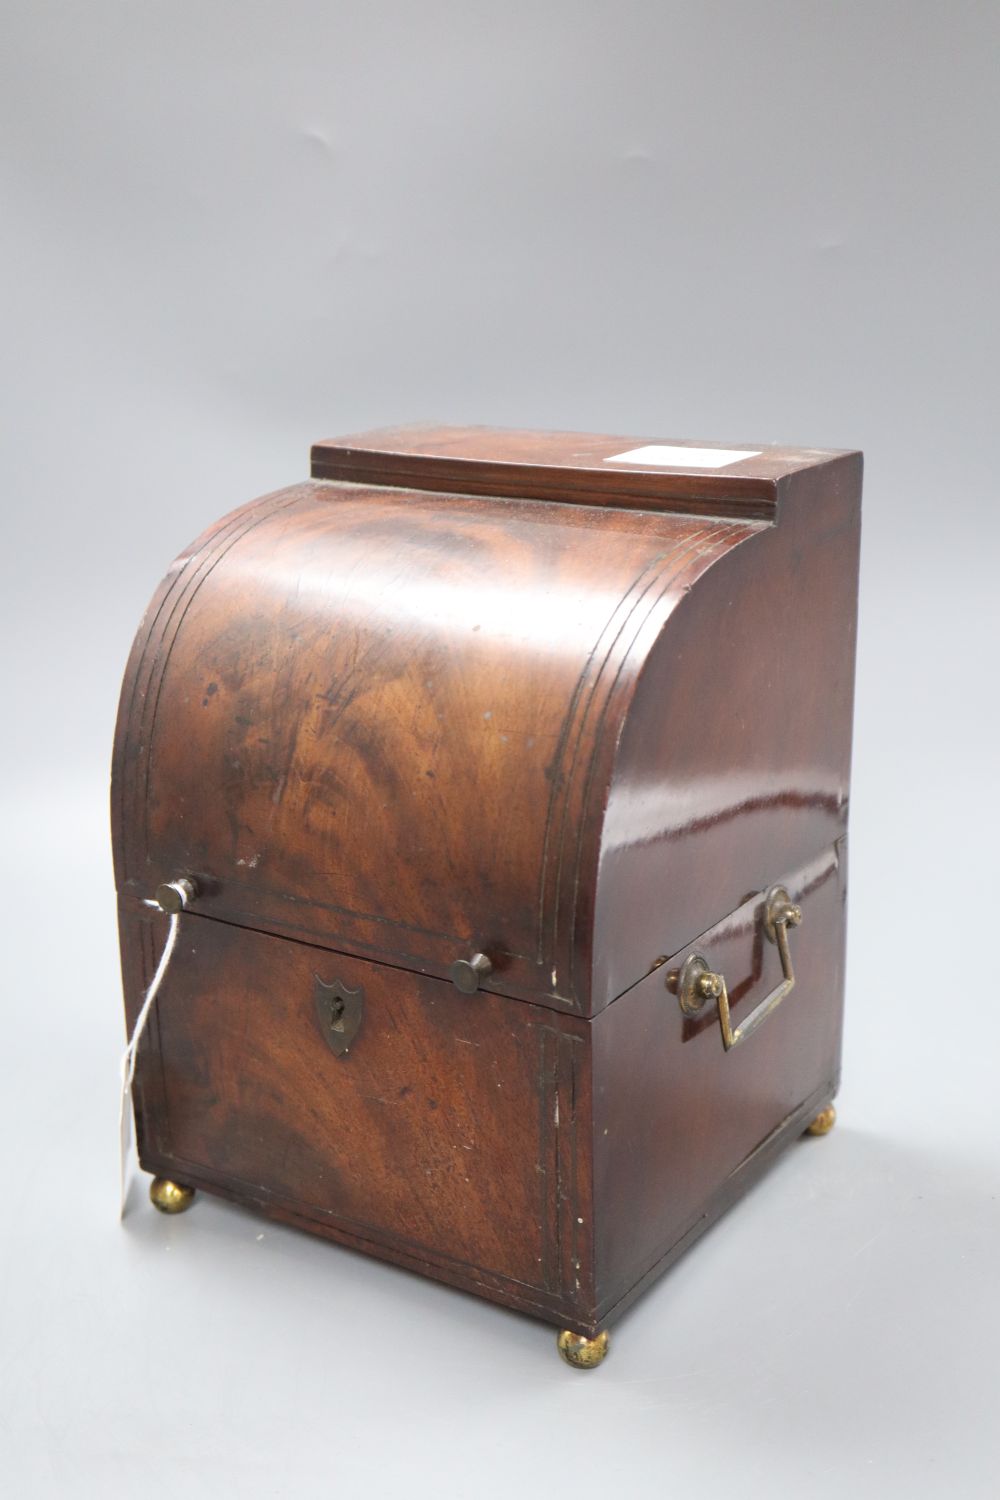 A 19th century Belgian mahogany decanter box containing three gilt decanters